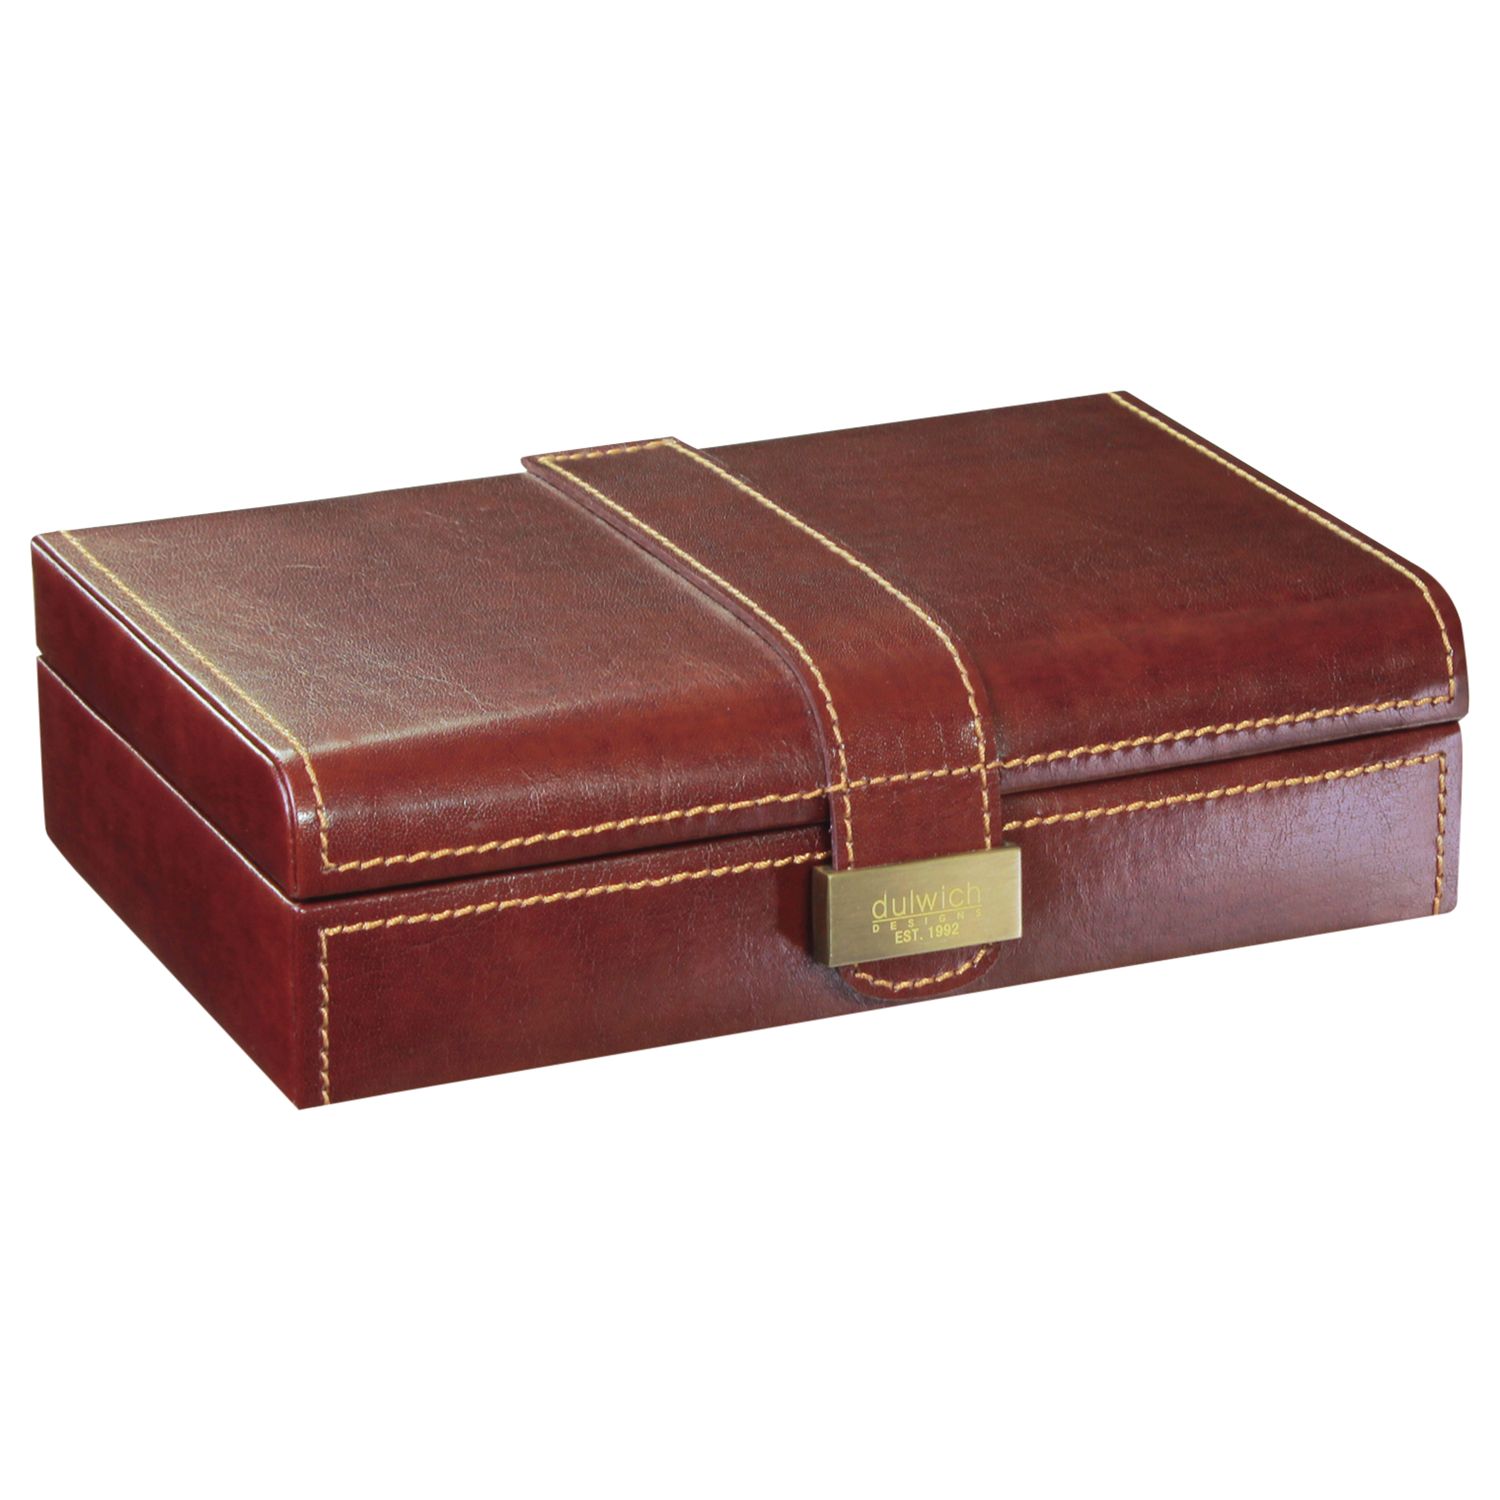 Dulwich Designs Heritage Cufflink Box, Leather, Brown